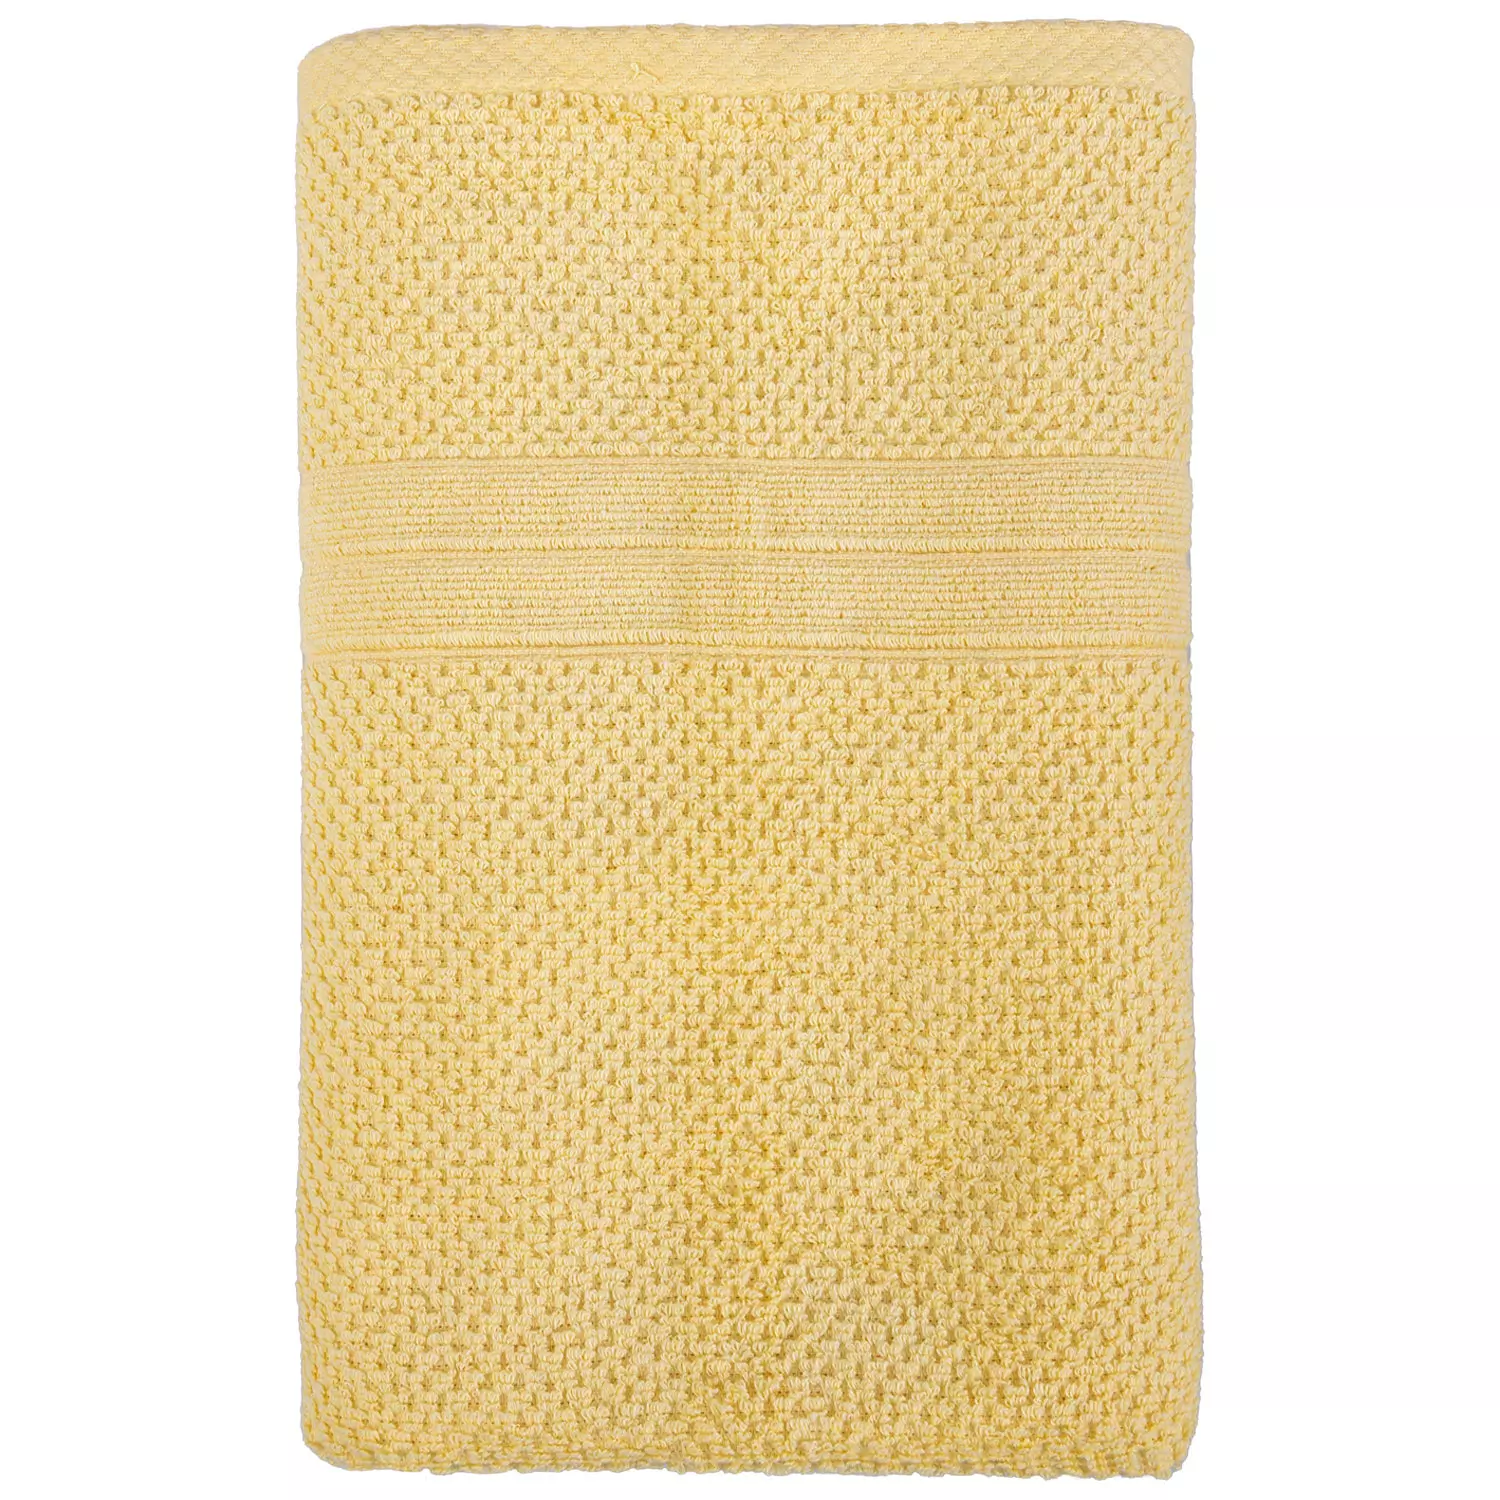 Bath towel, 25"x50", yellow